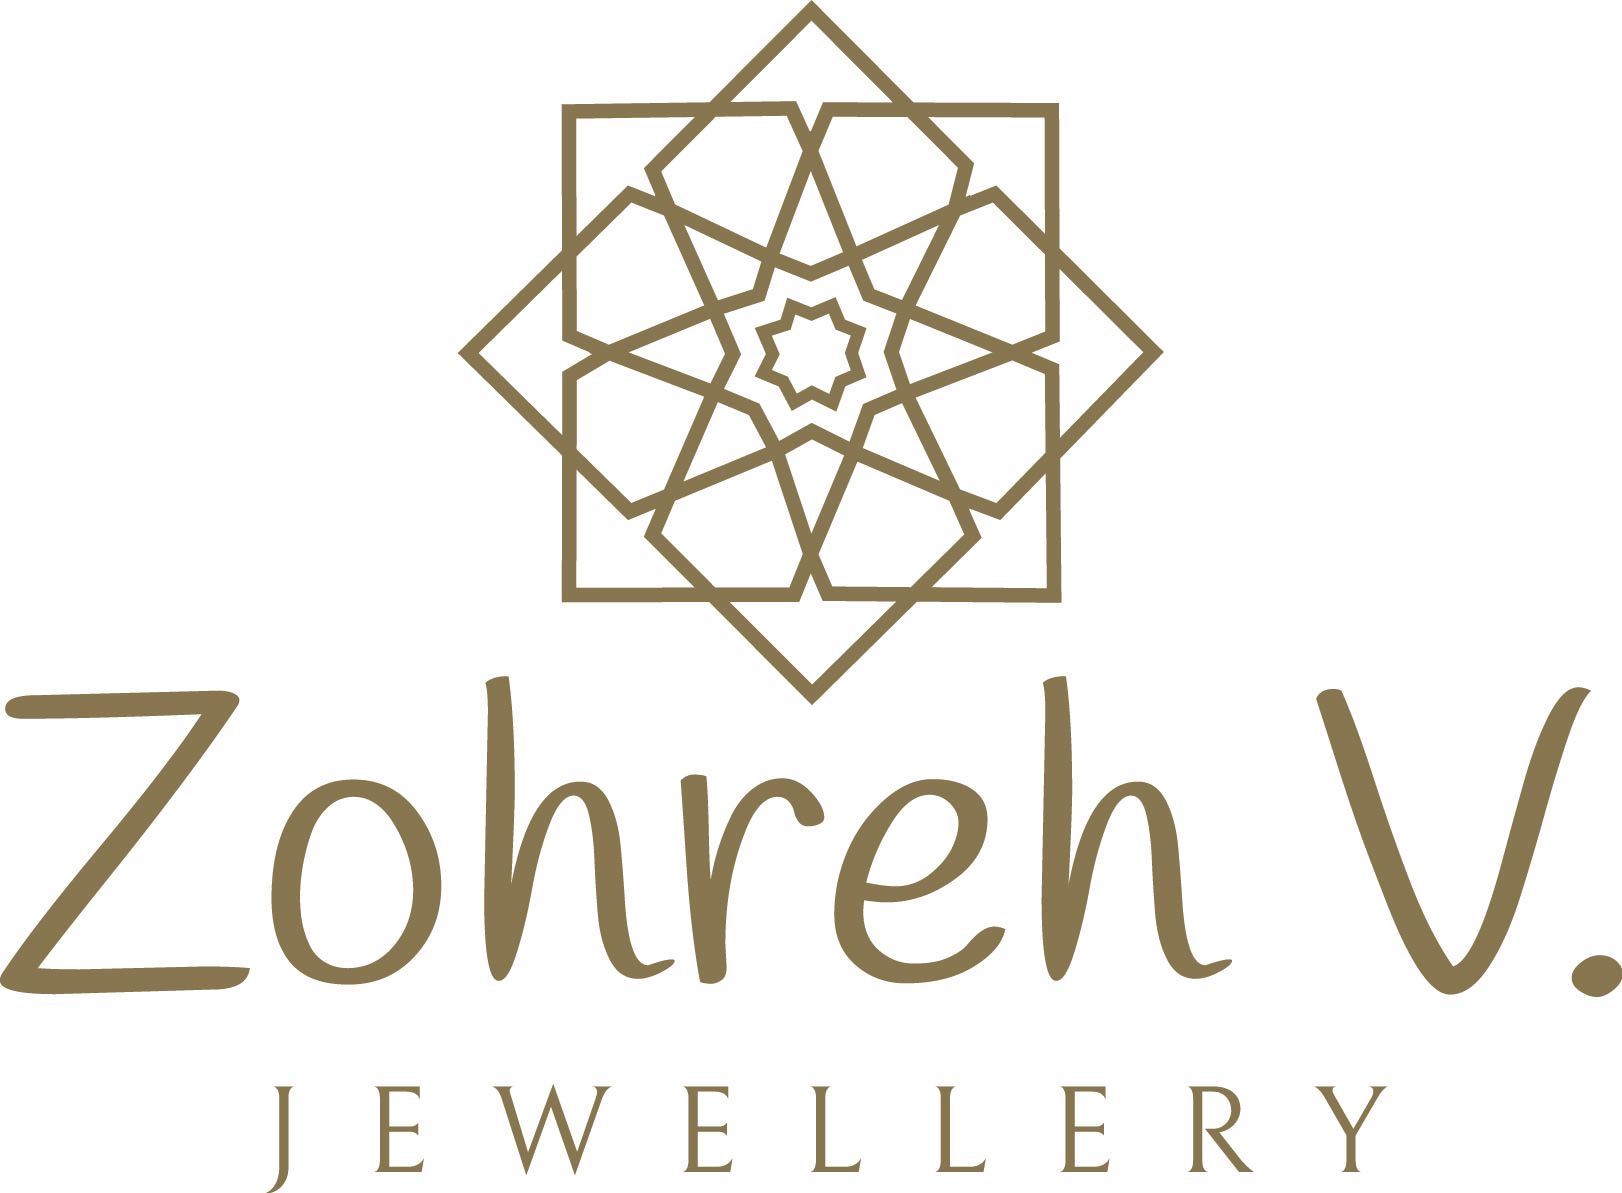 Zohreh V. Jewellery